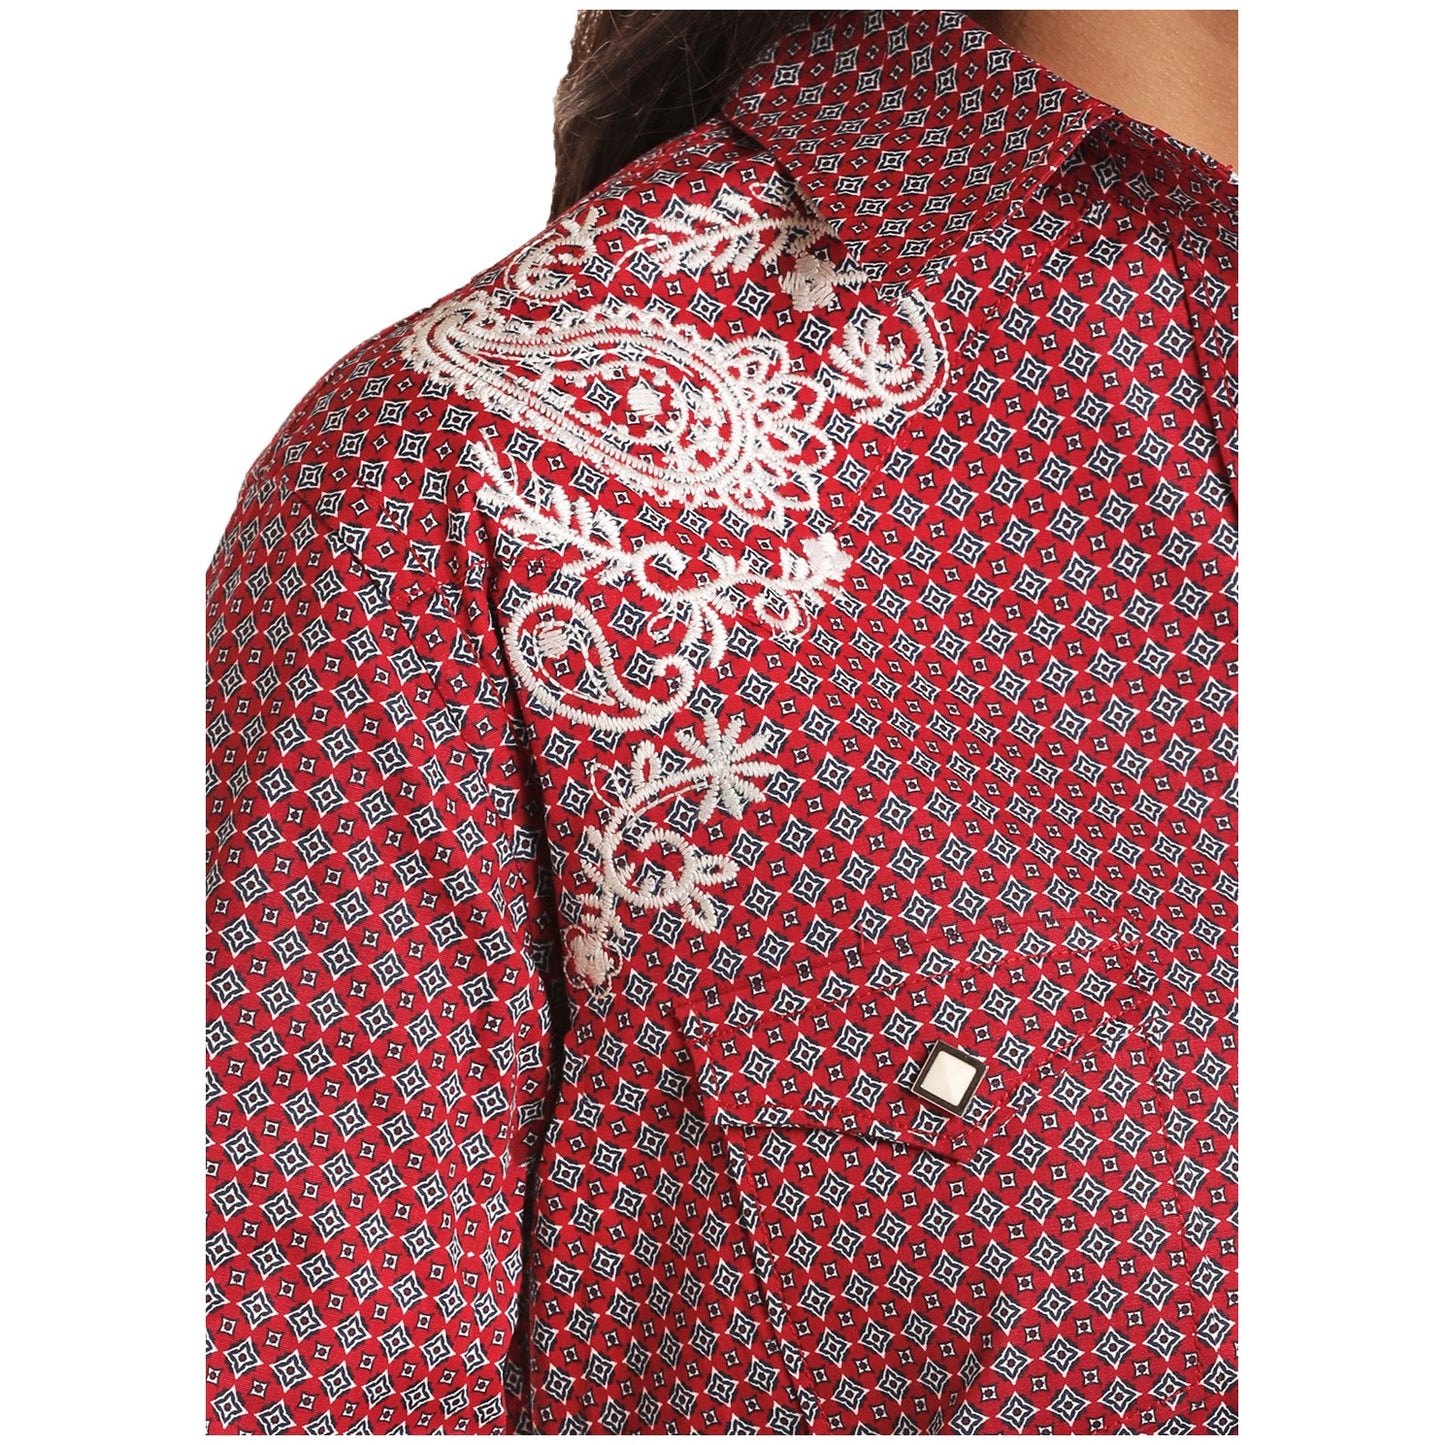 Panhandle RoughStock Ladies Long Sleeve Snap Shirt R4S9027